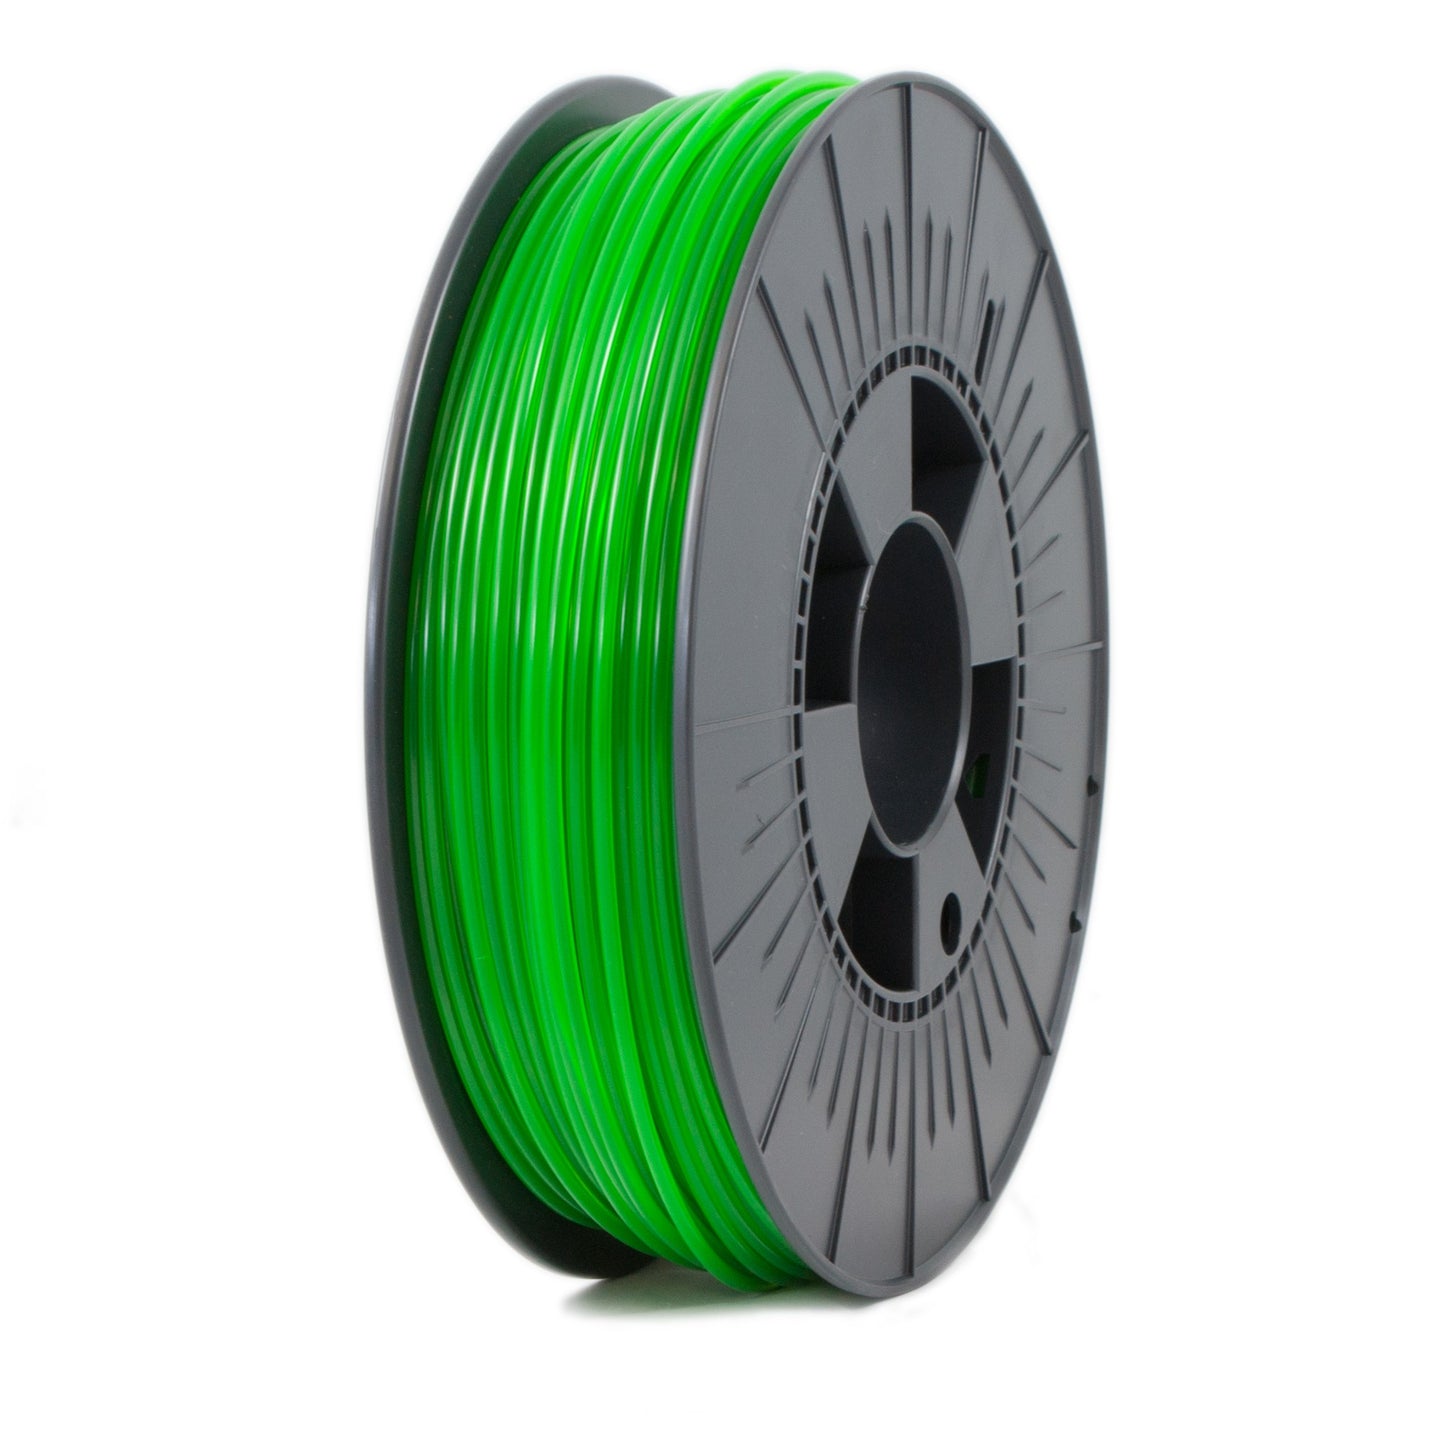 PETG Filament 2,85 grün transluzent